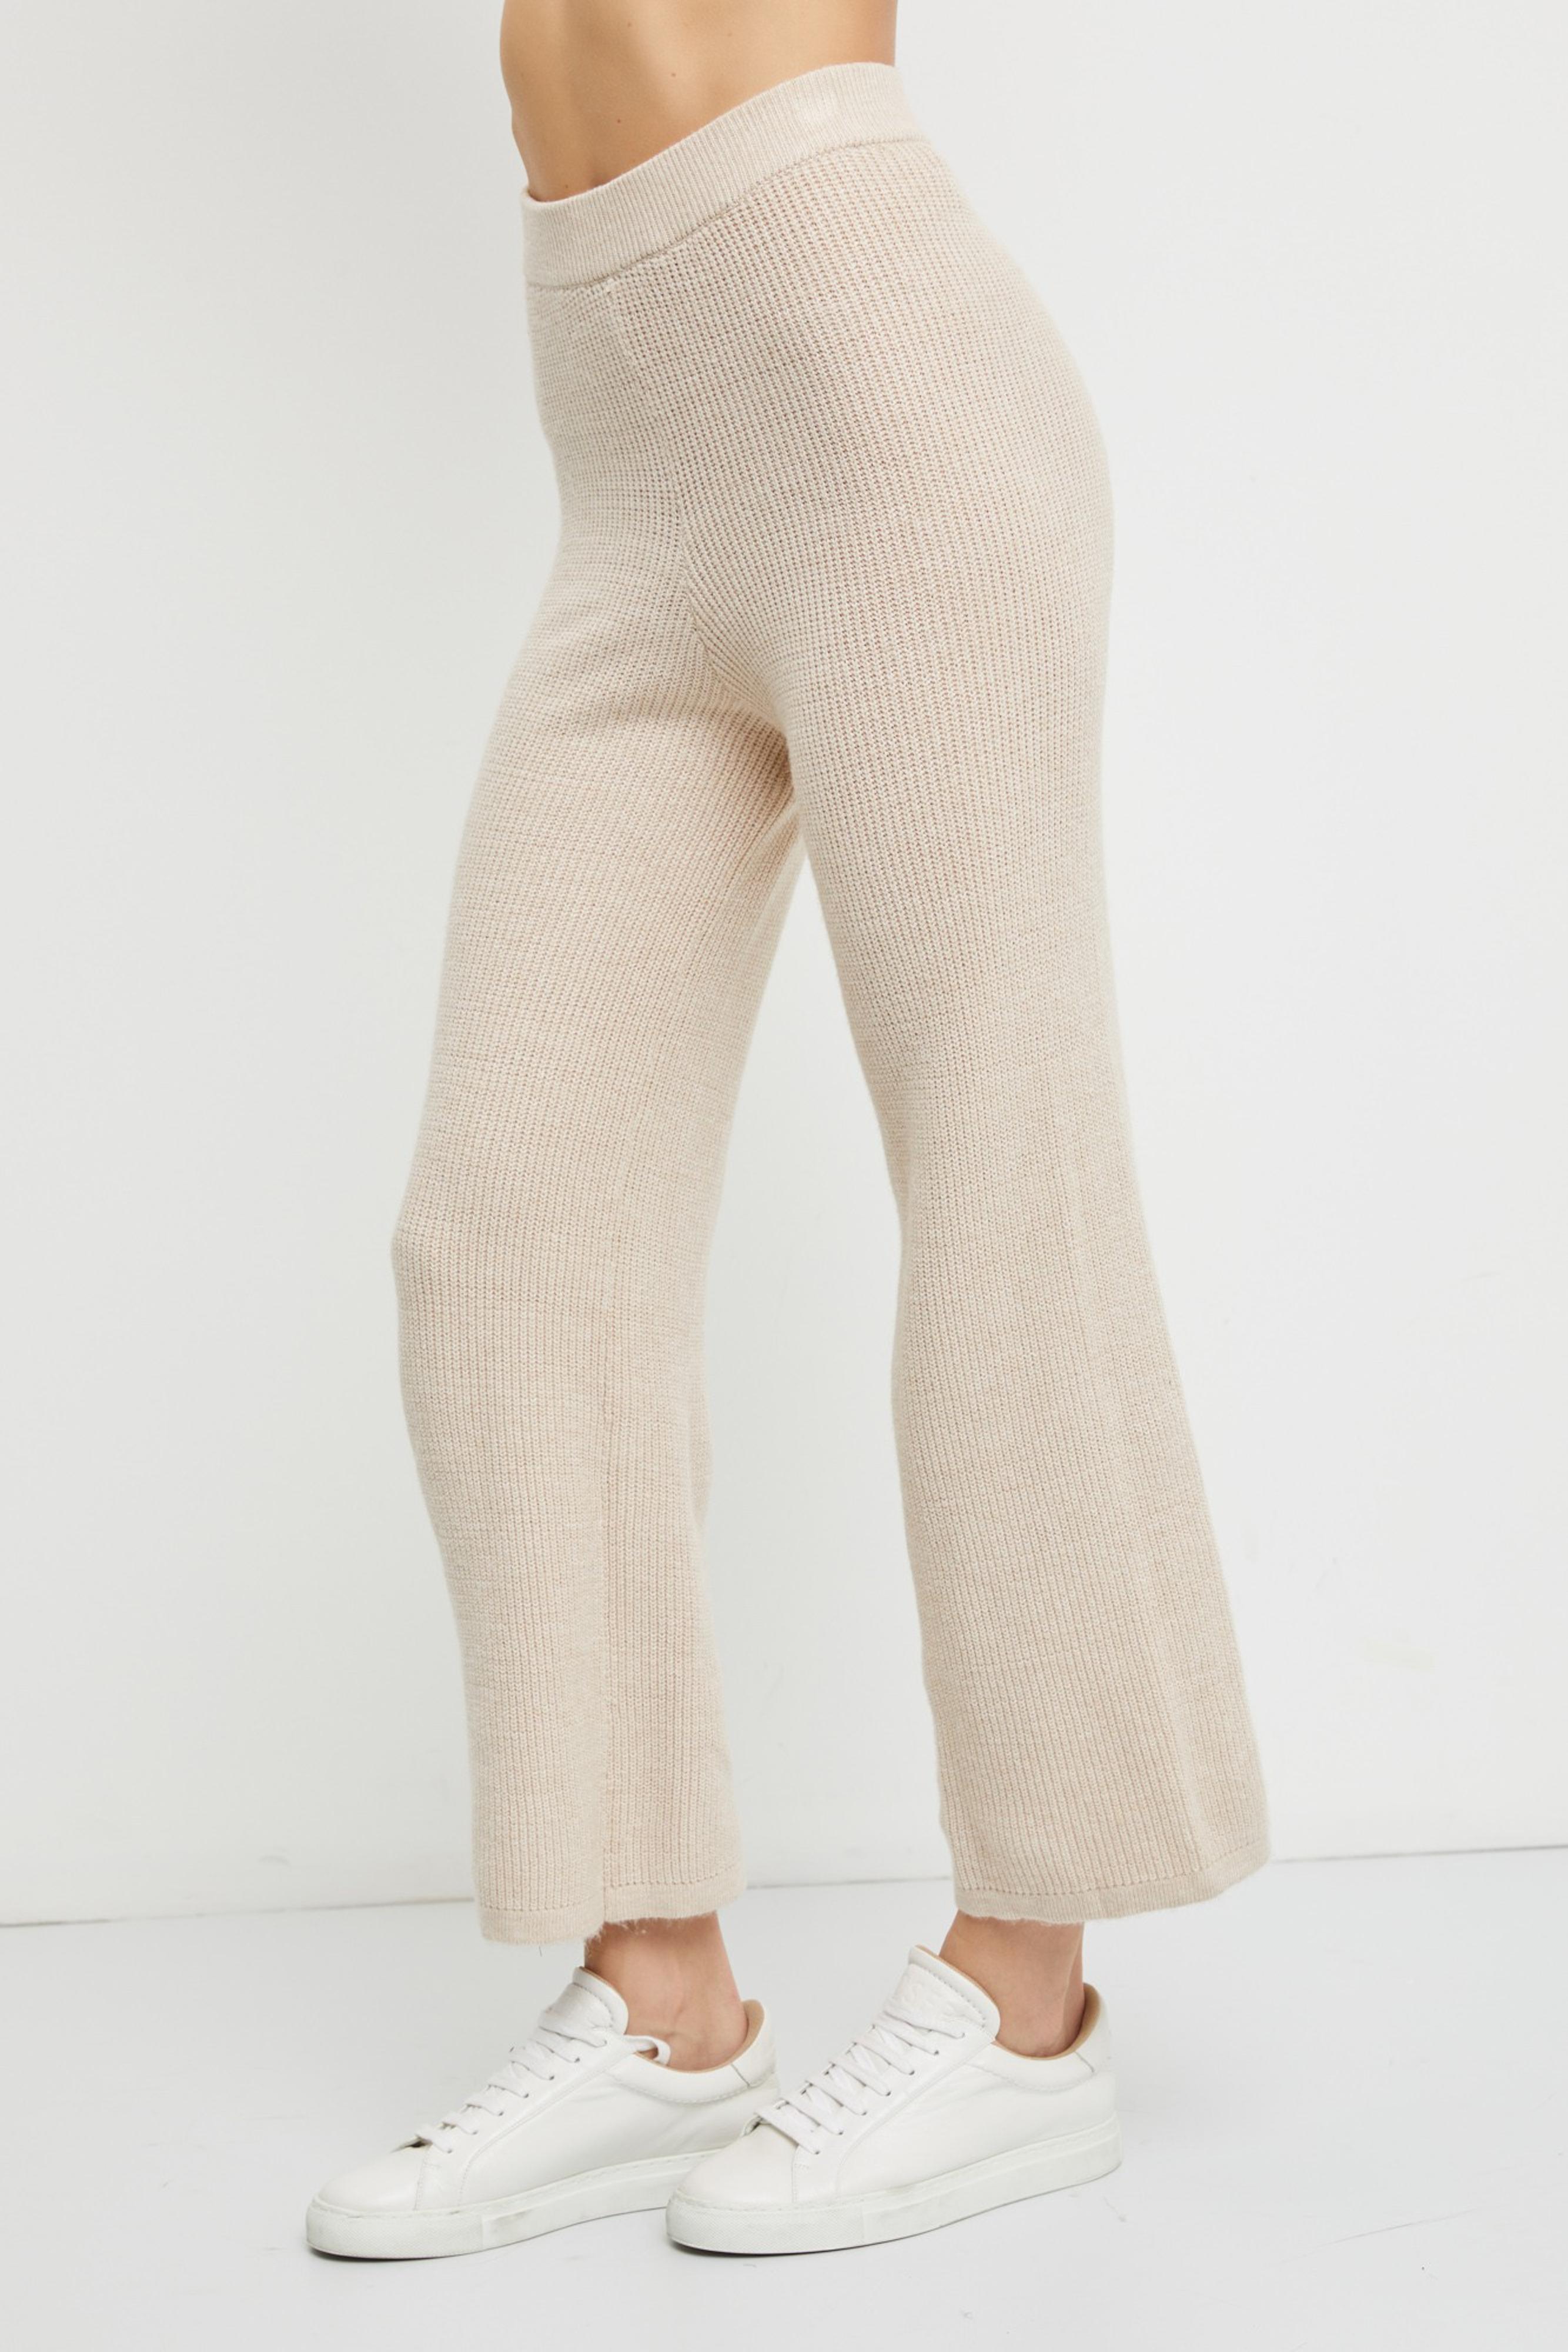  The Hayden Knit Pants